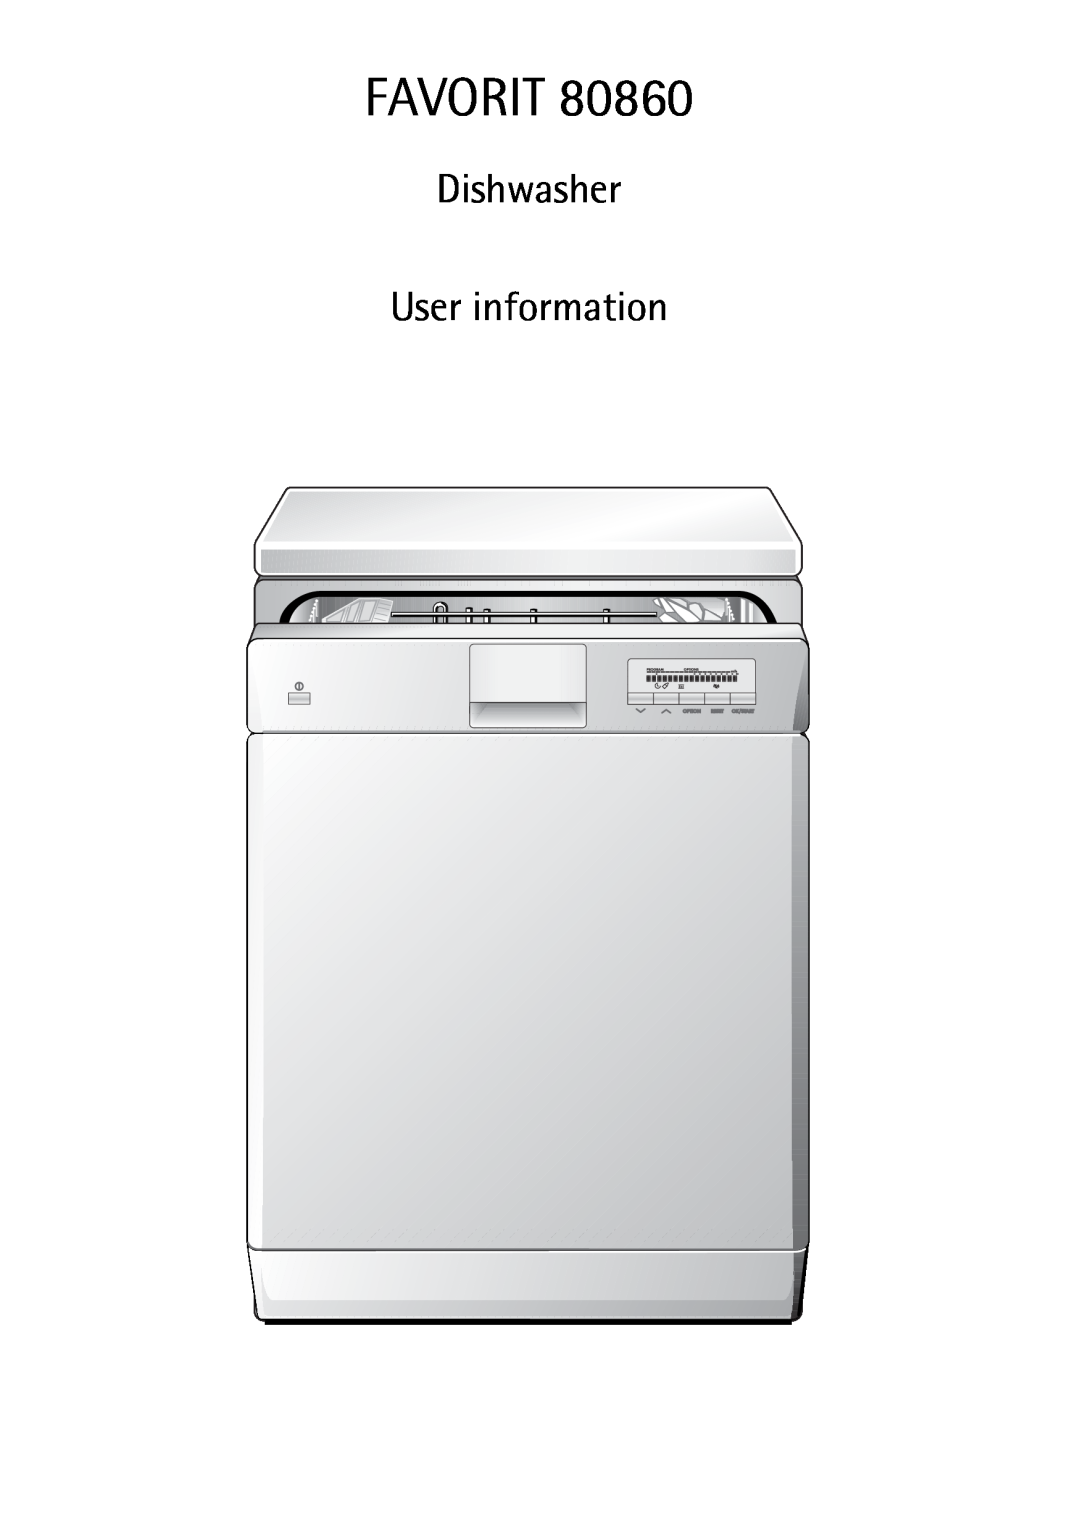 Electrolux FAVORIT 80860 manual Favorit, Dishwasher User information 